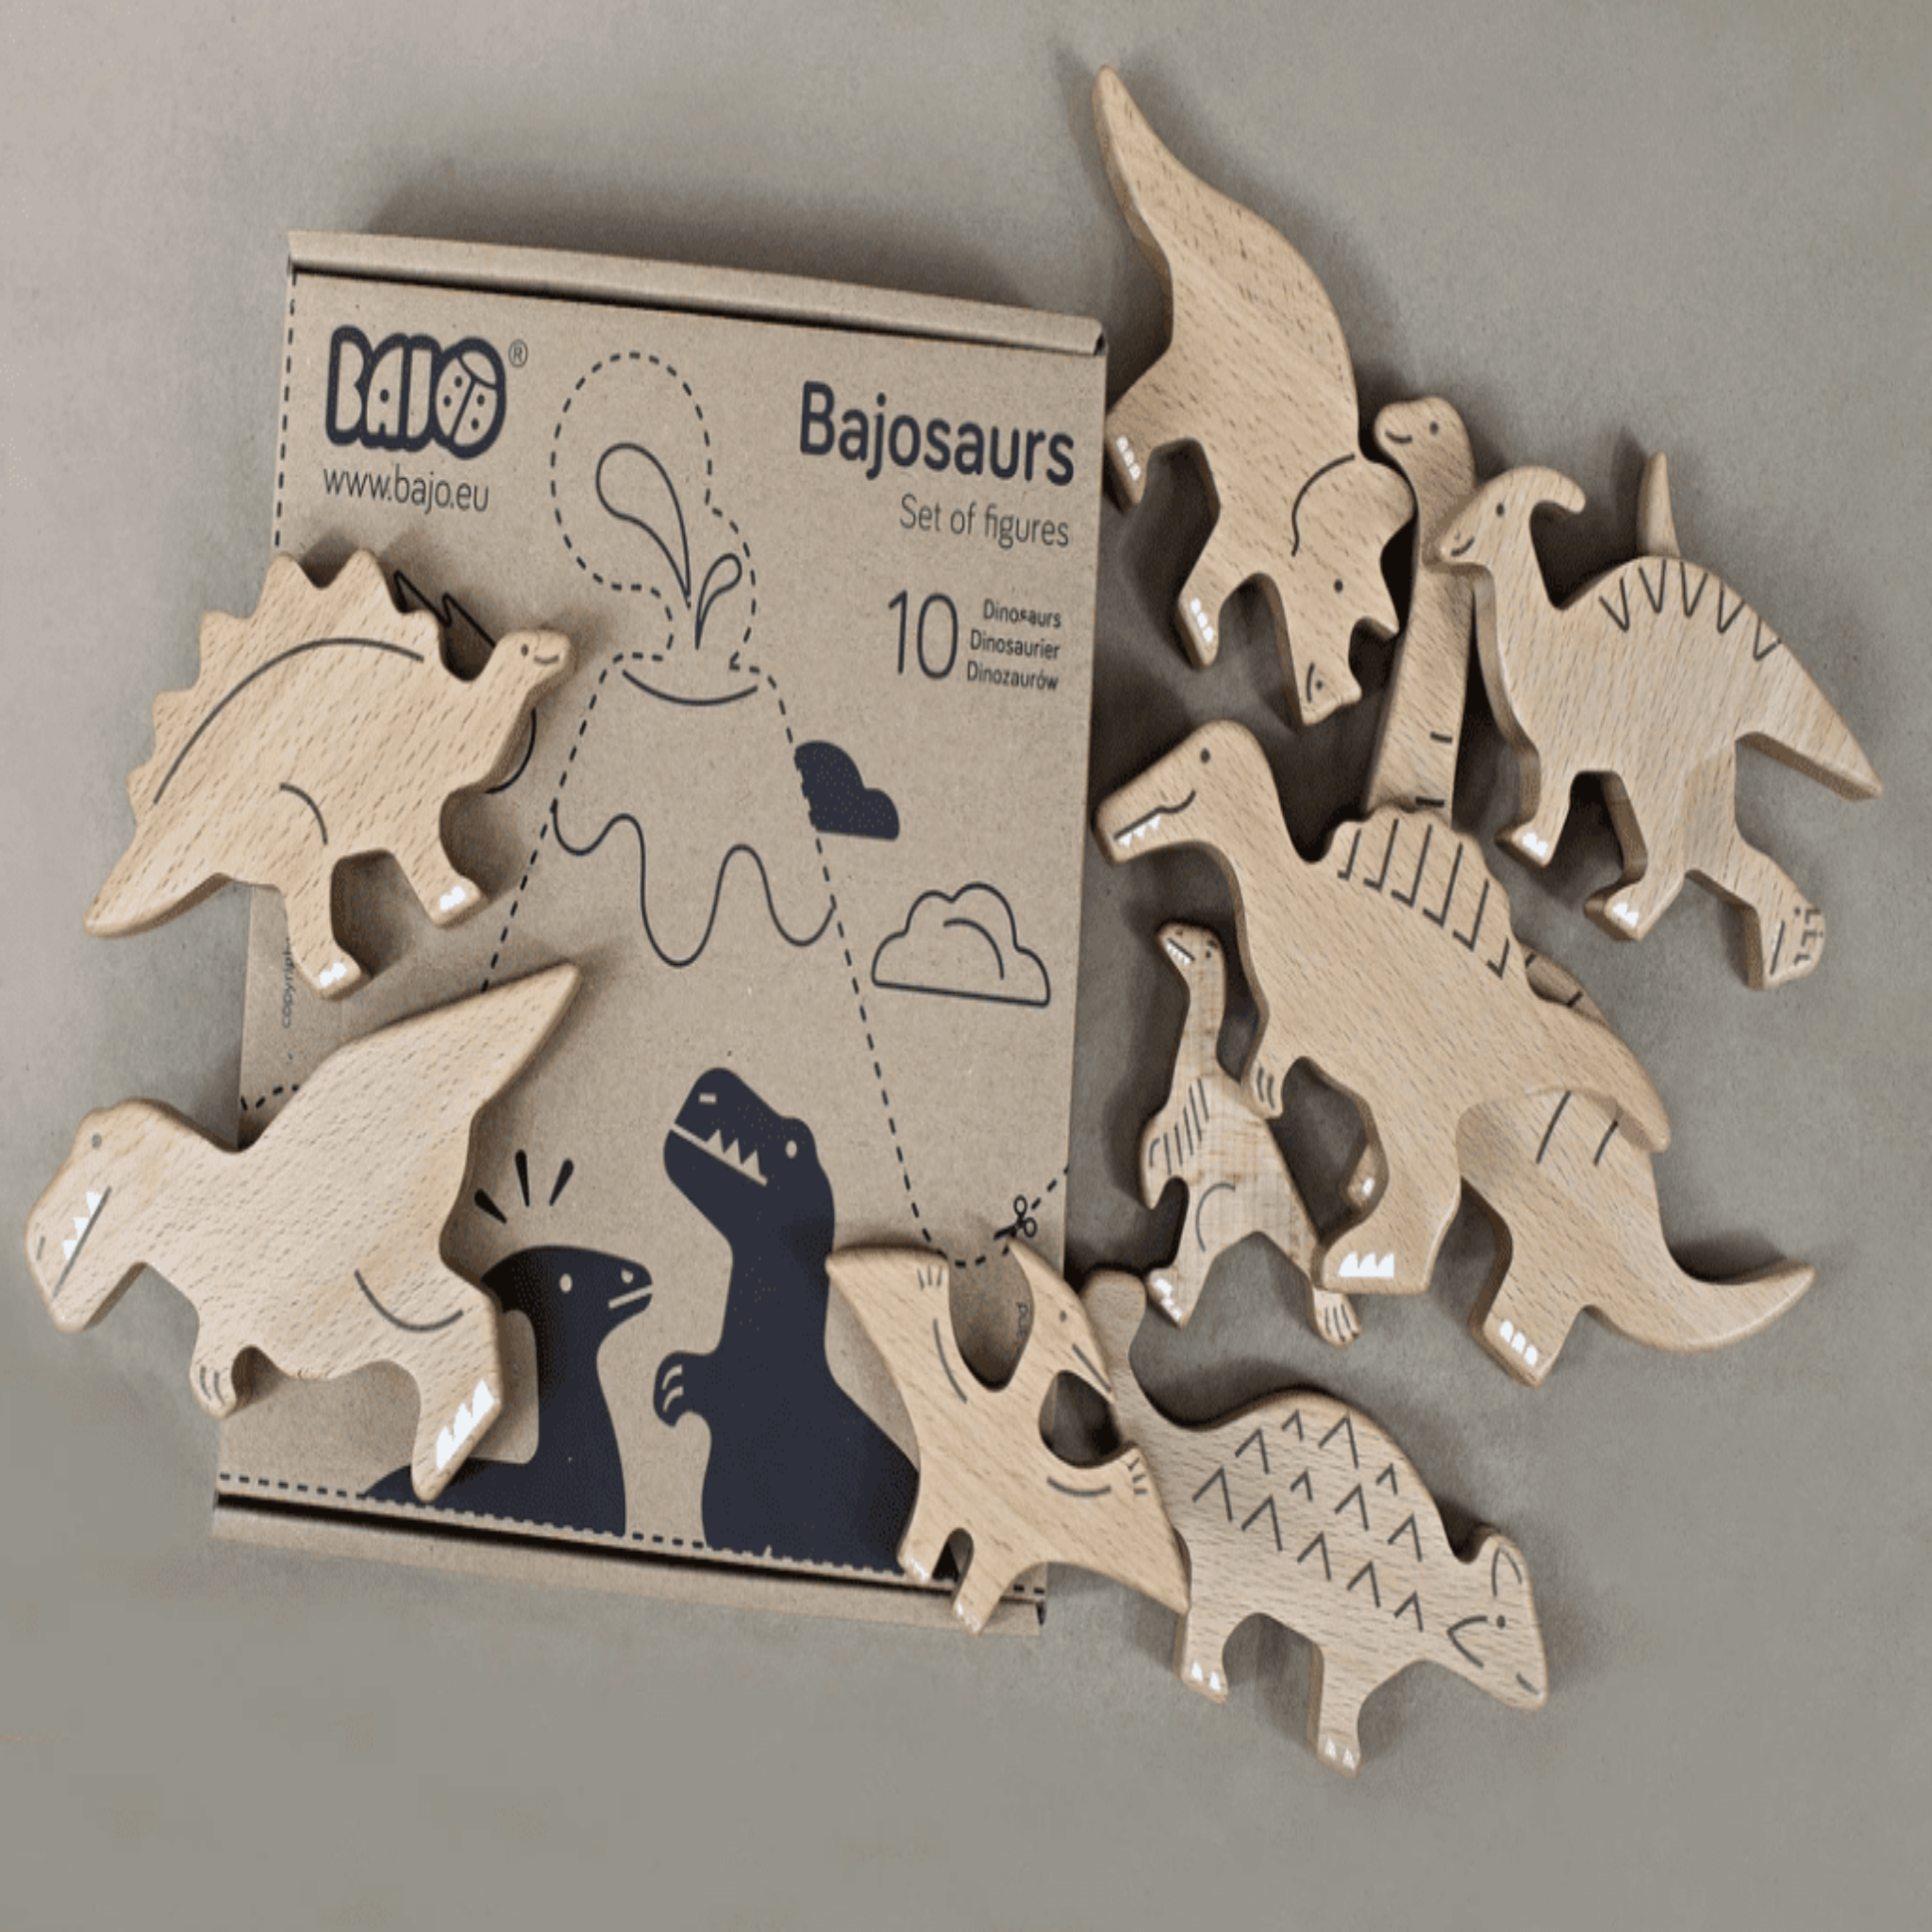 Bajosaurs Dinosaurs with Habitat Set.